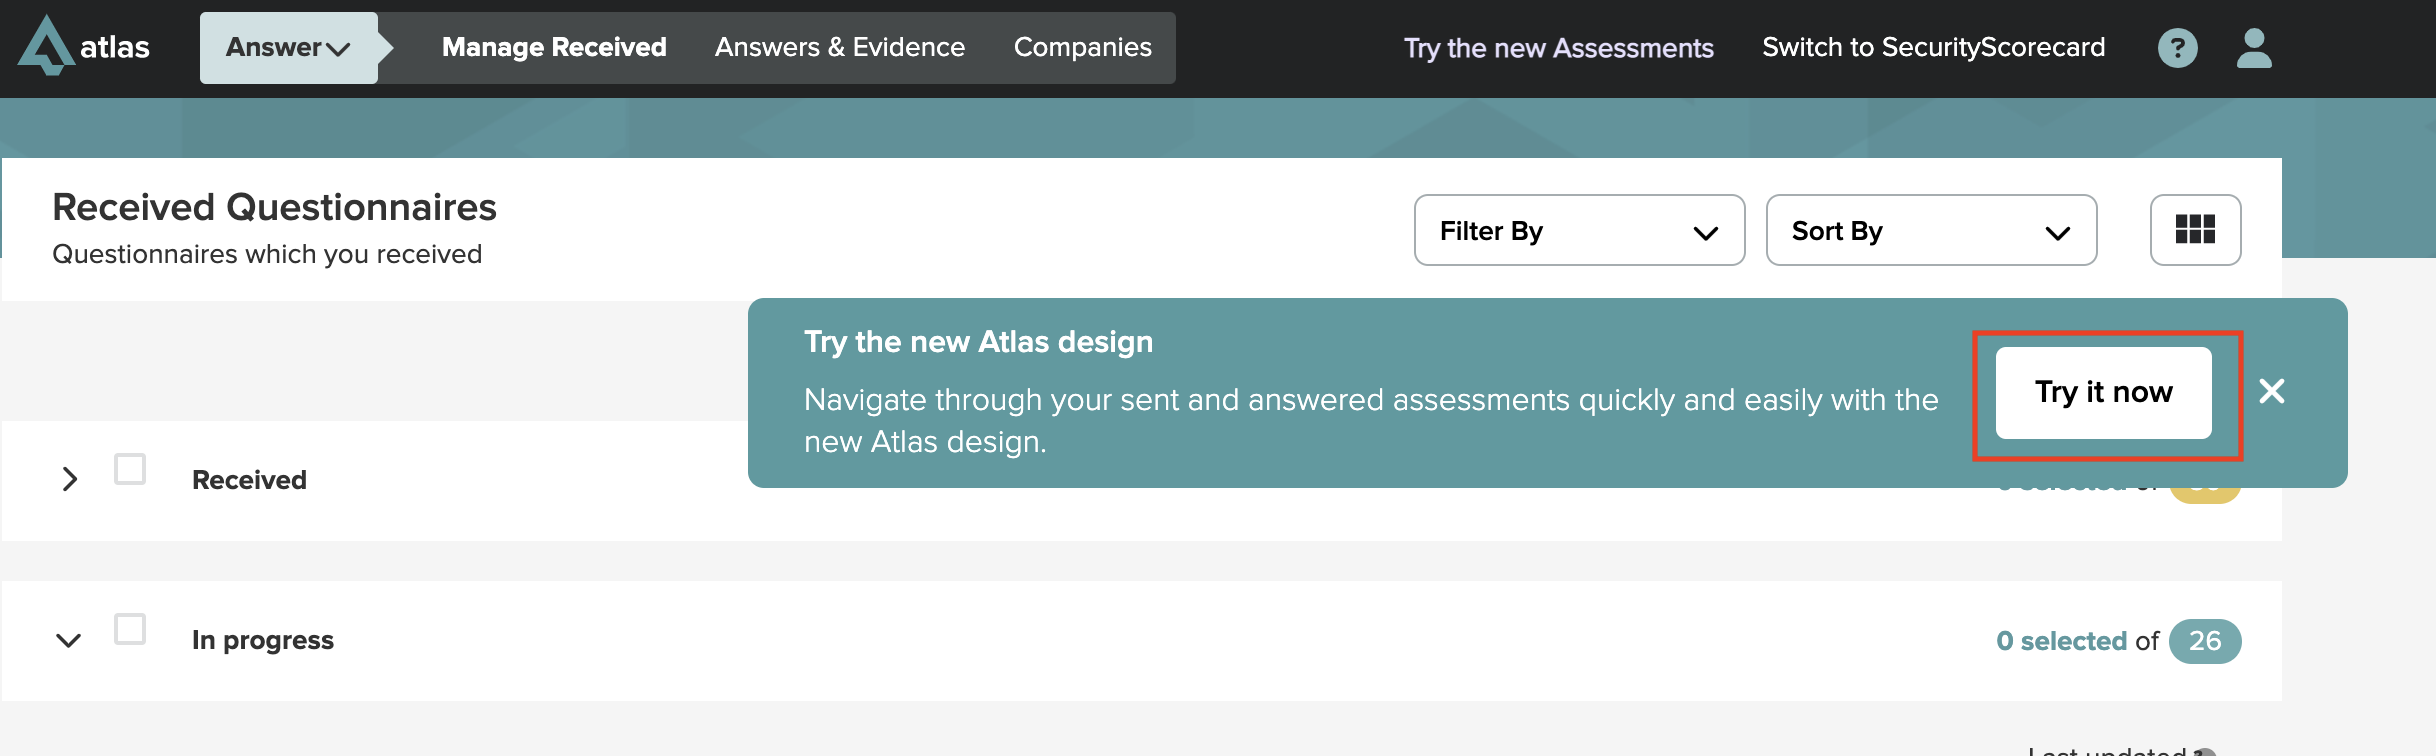 assessments-atlas-go2-assessments.png